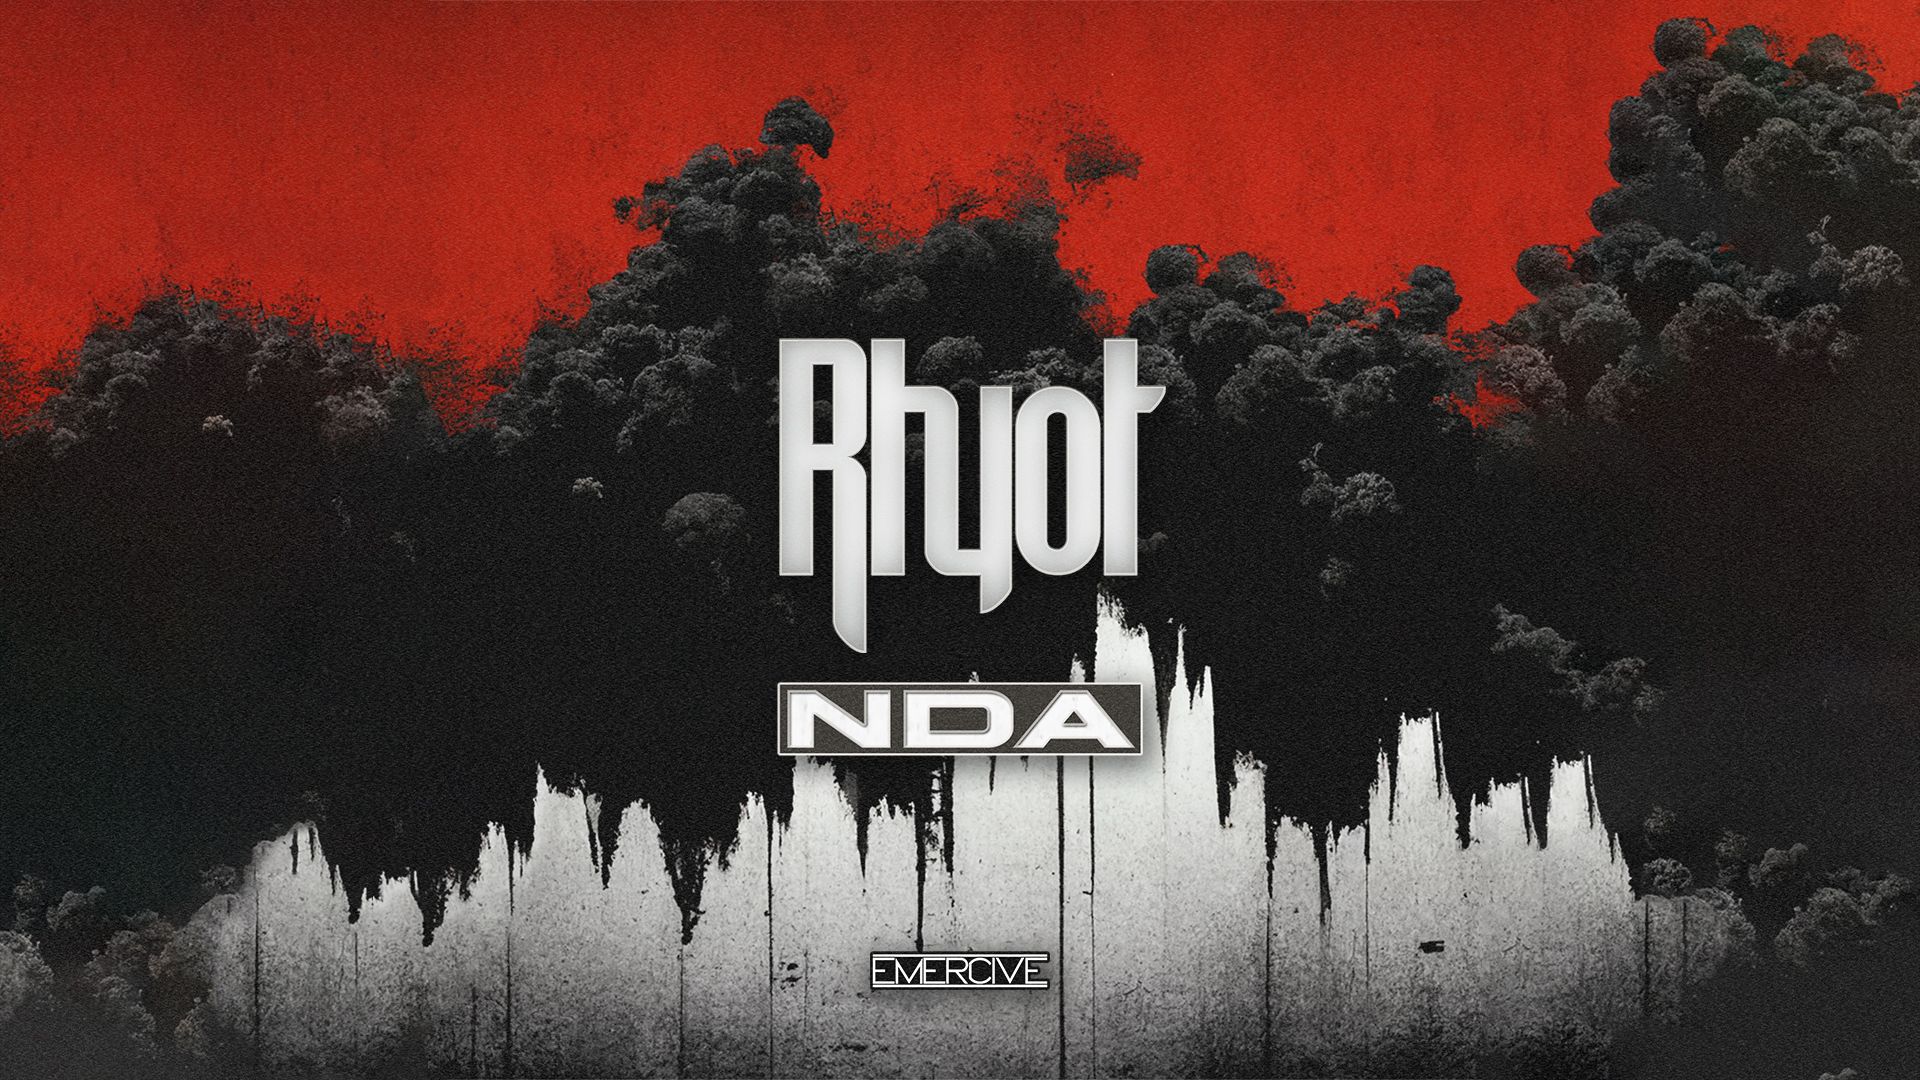 OUT NOW: Rhyot - NDA (Single)